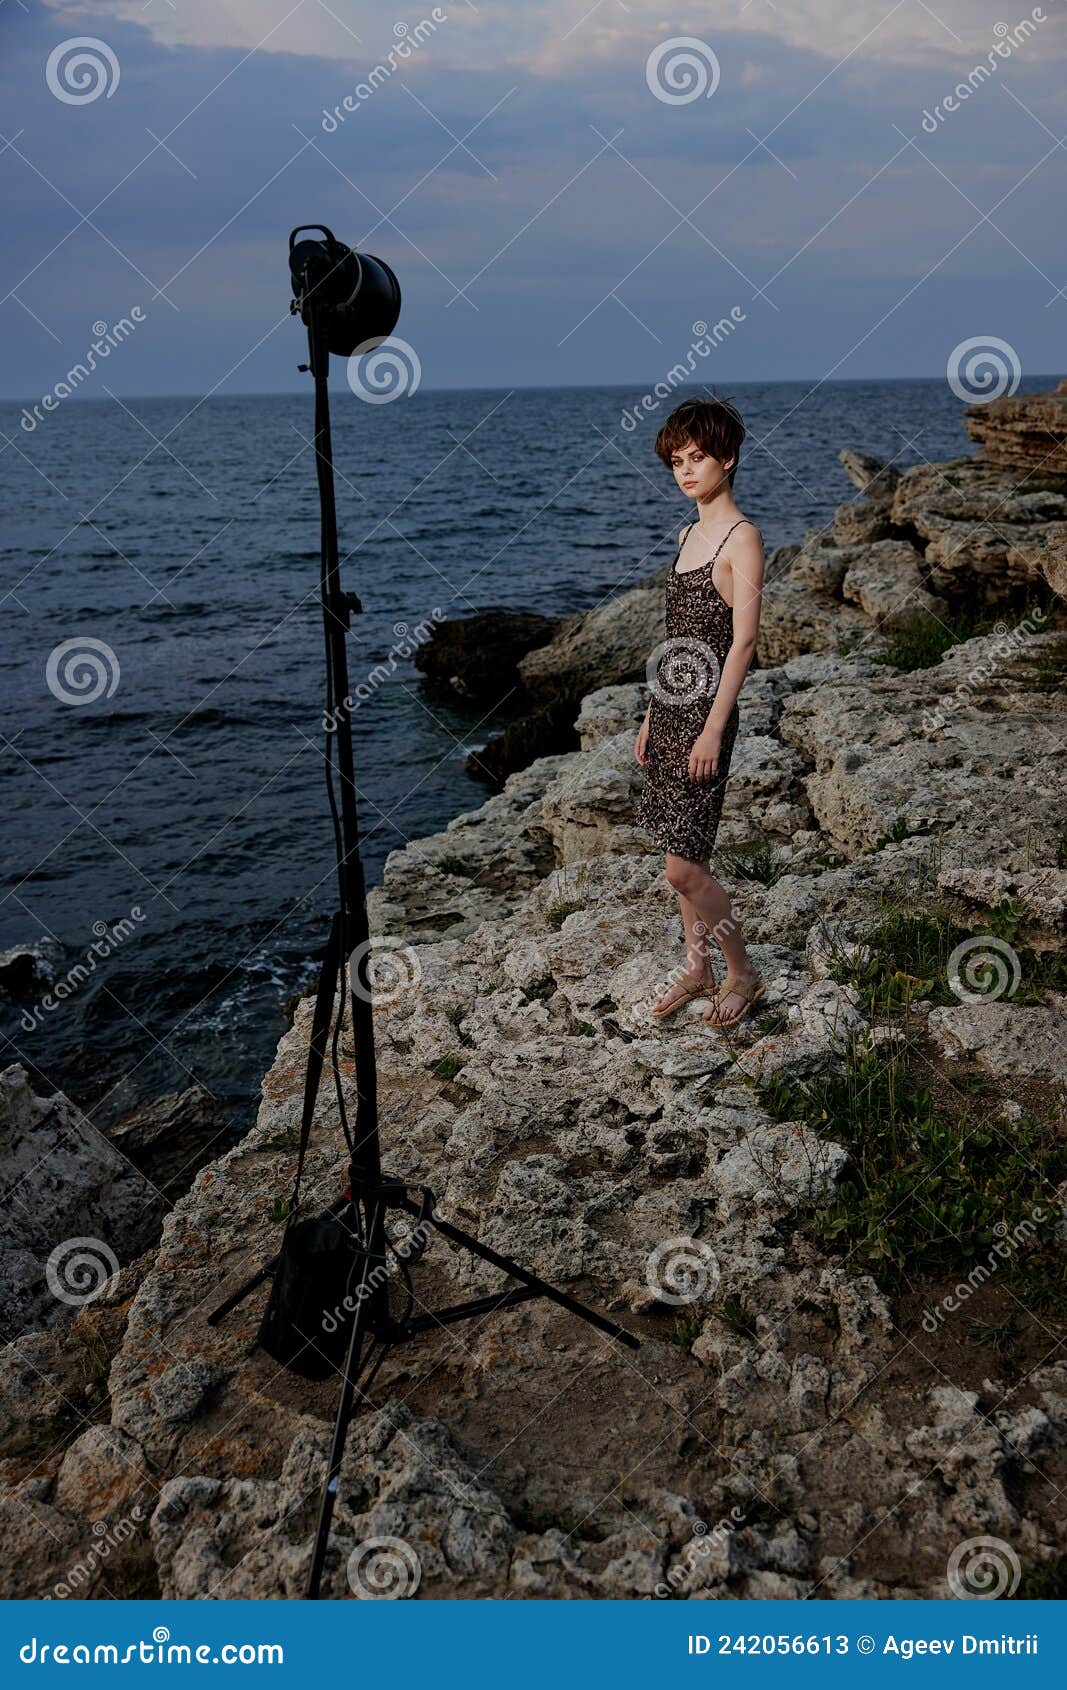 Beautiful Woman Standing On Stones Posing In Beach Dress Luxury Stock Image Image Of Equipment 